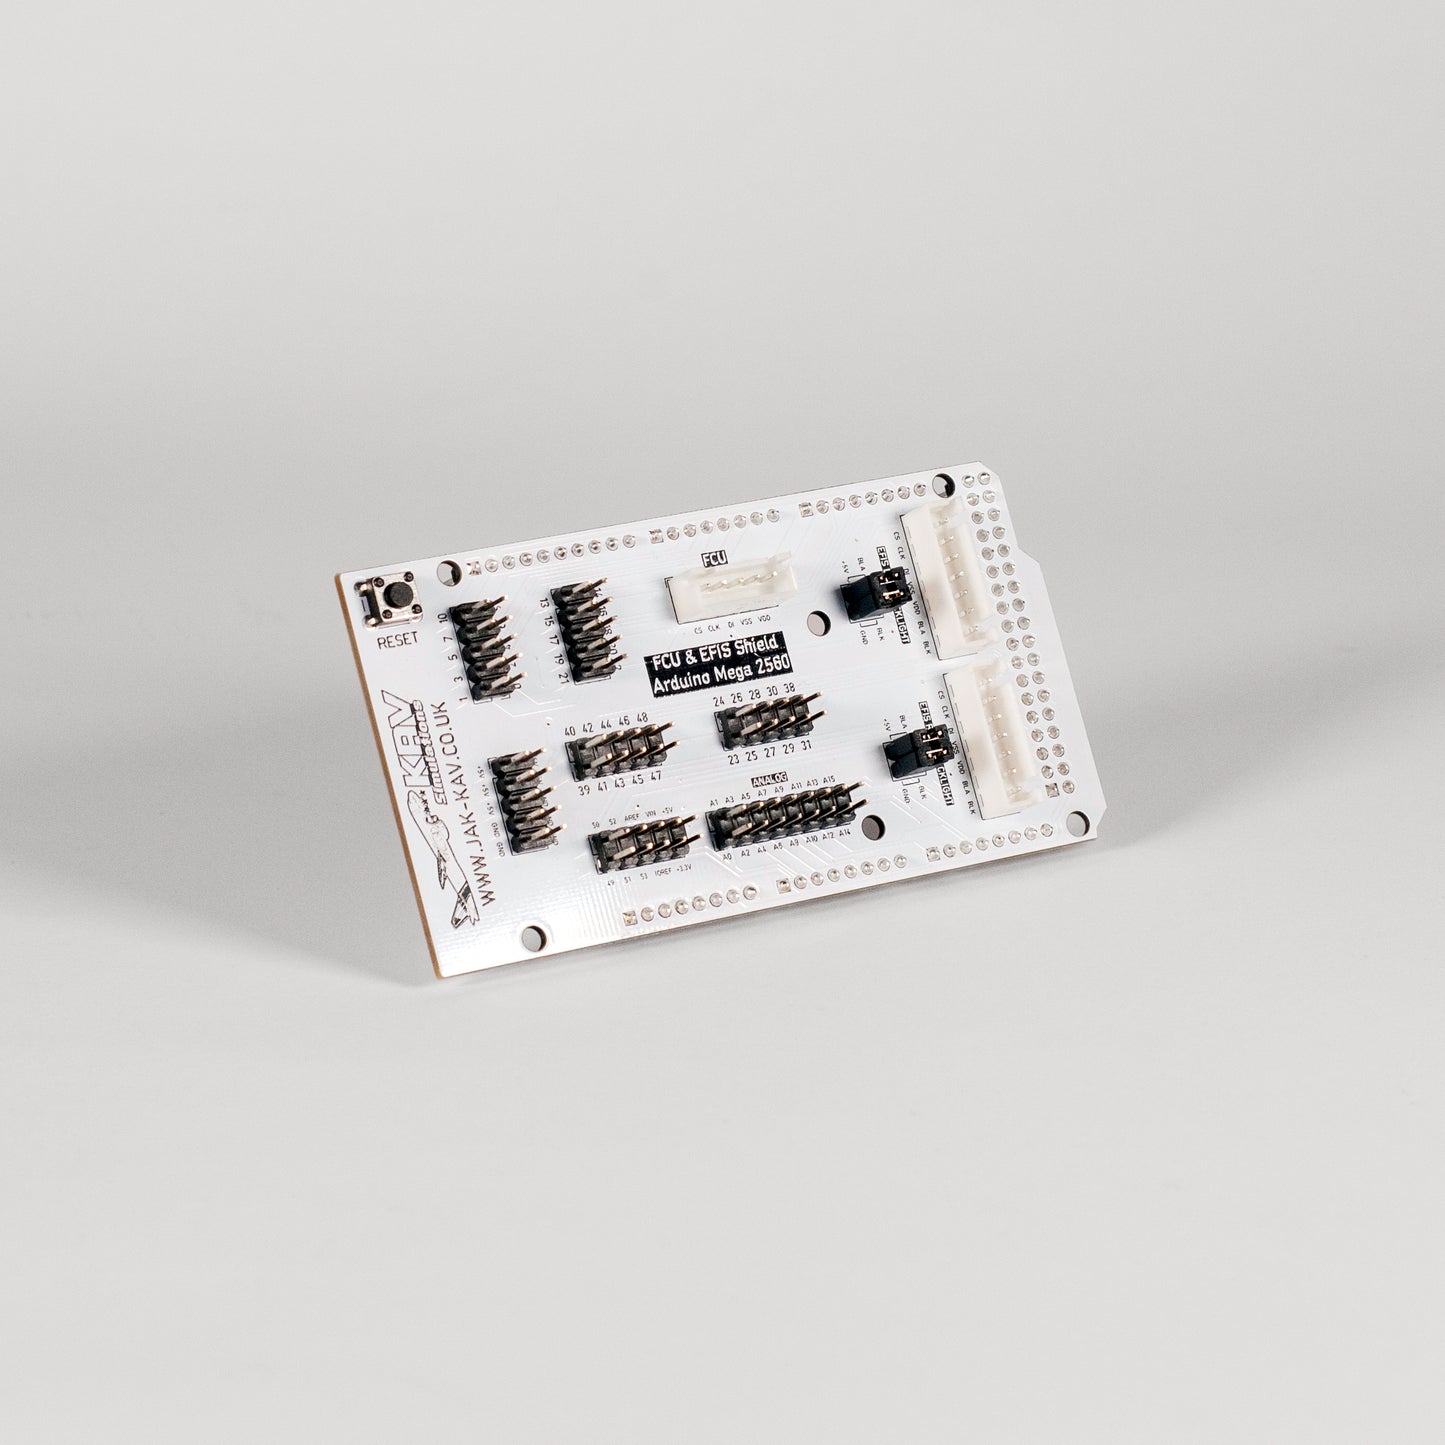 Arduino Mega 2560 Shields (V2)